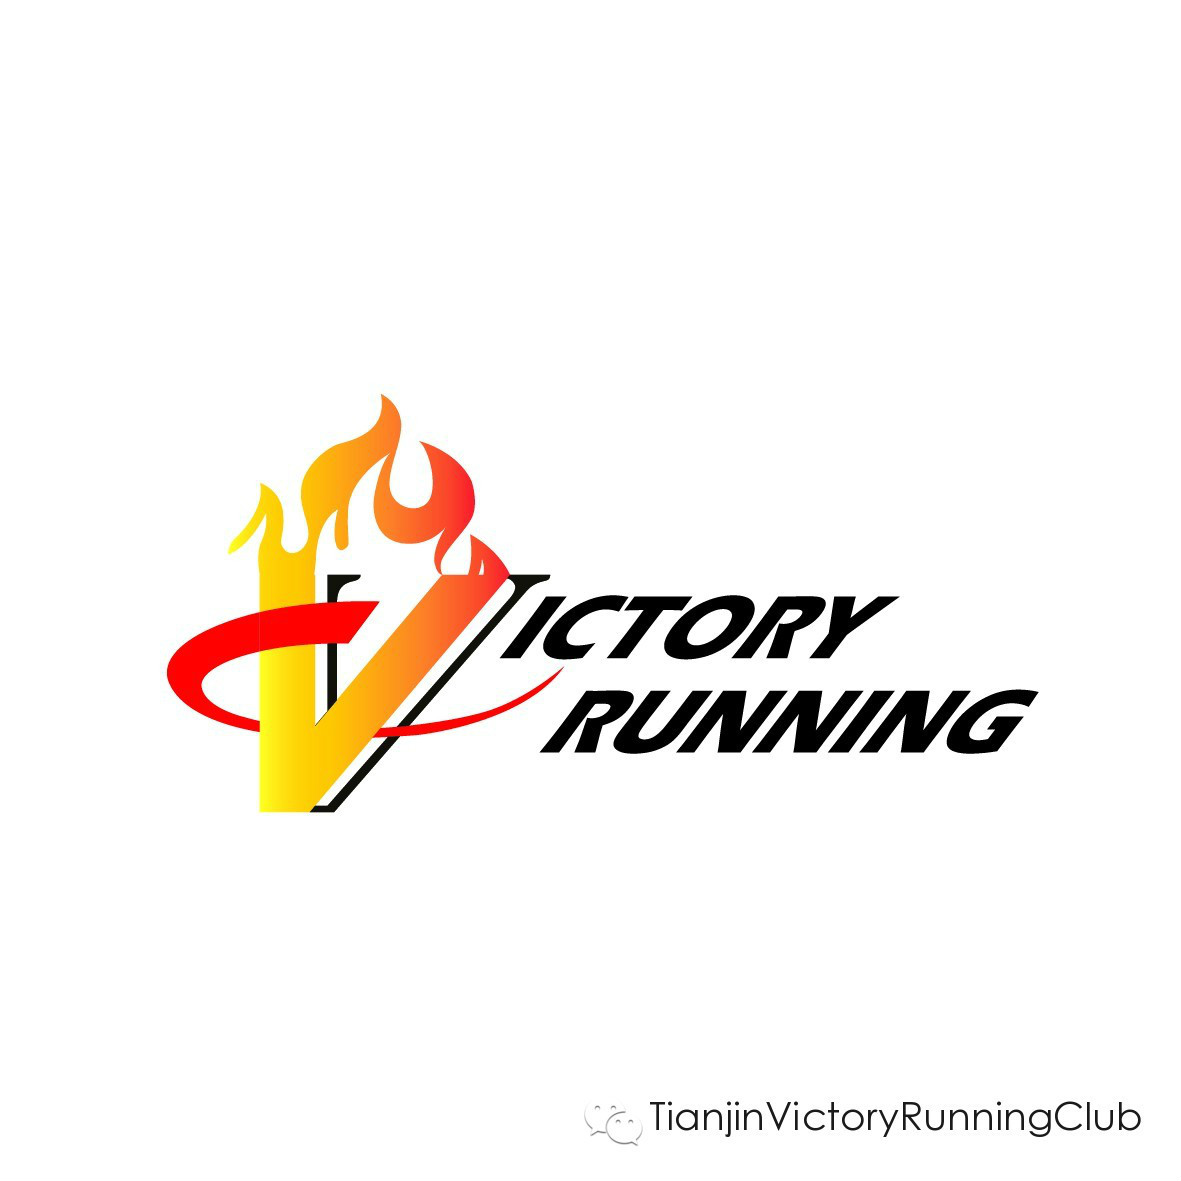 Victory Running Club